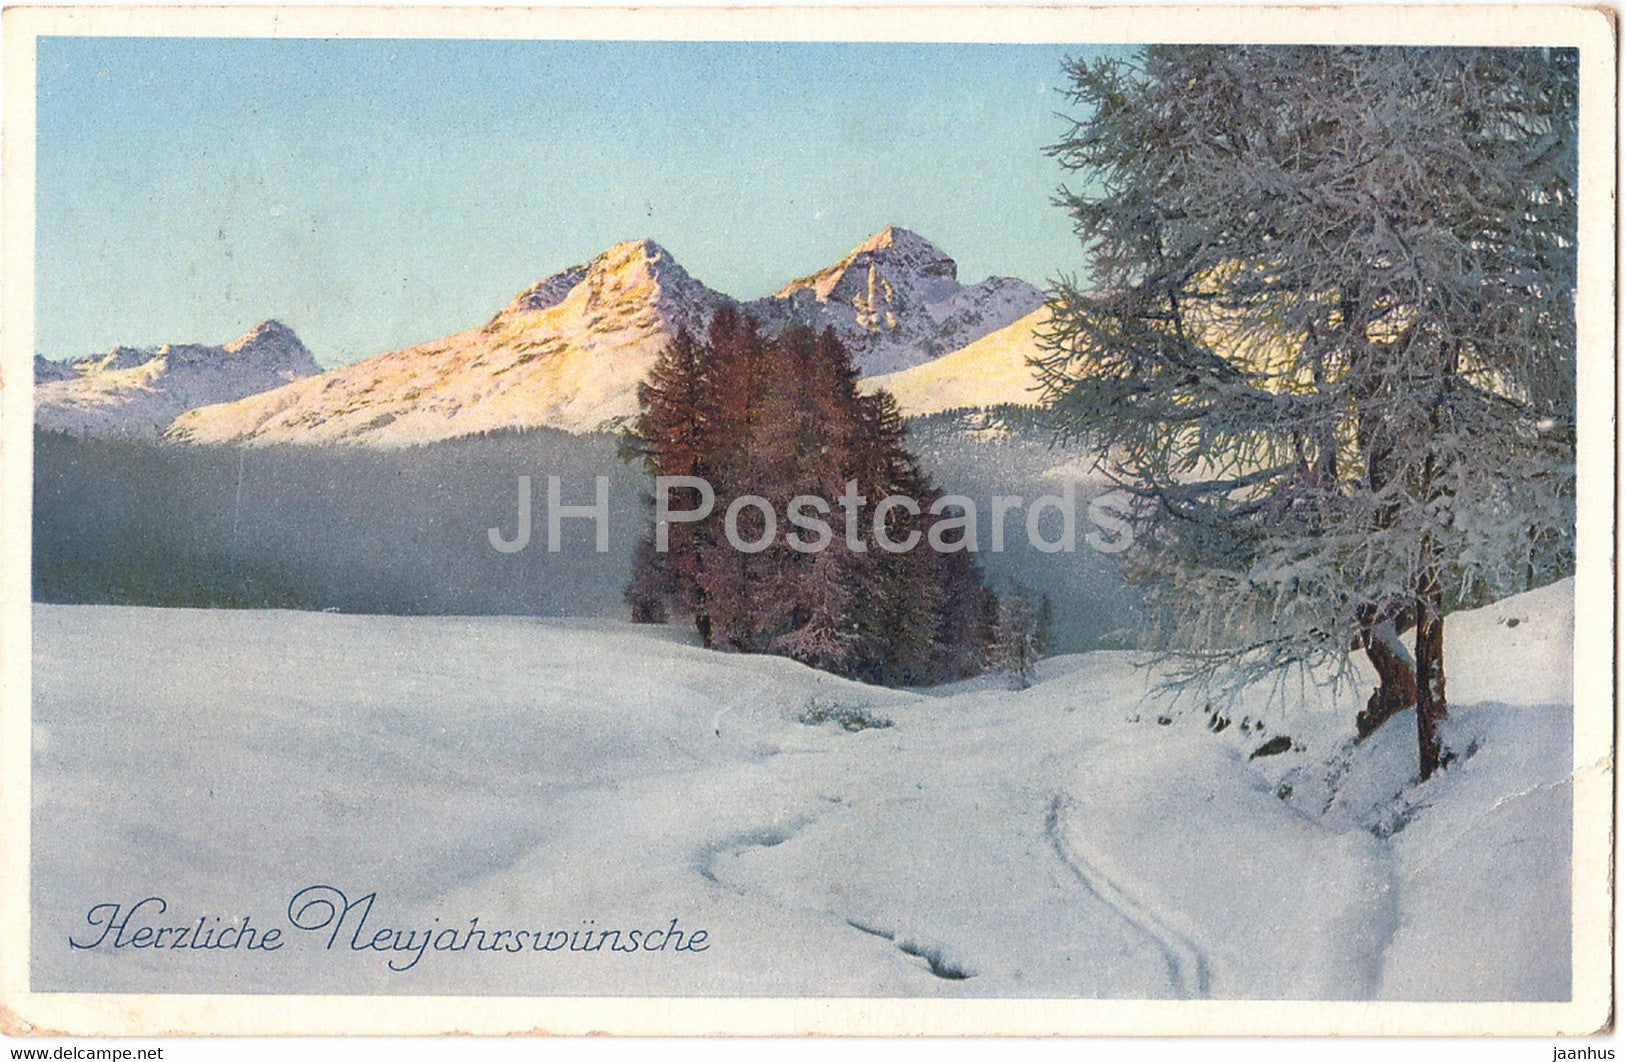 New Year Greeting Card - Herzliche Neujahrswunsche - winter view - A. Ruegg - old postcard - 1927 - Switzerland - used - JH Postcards